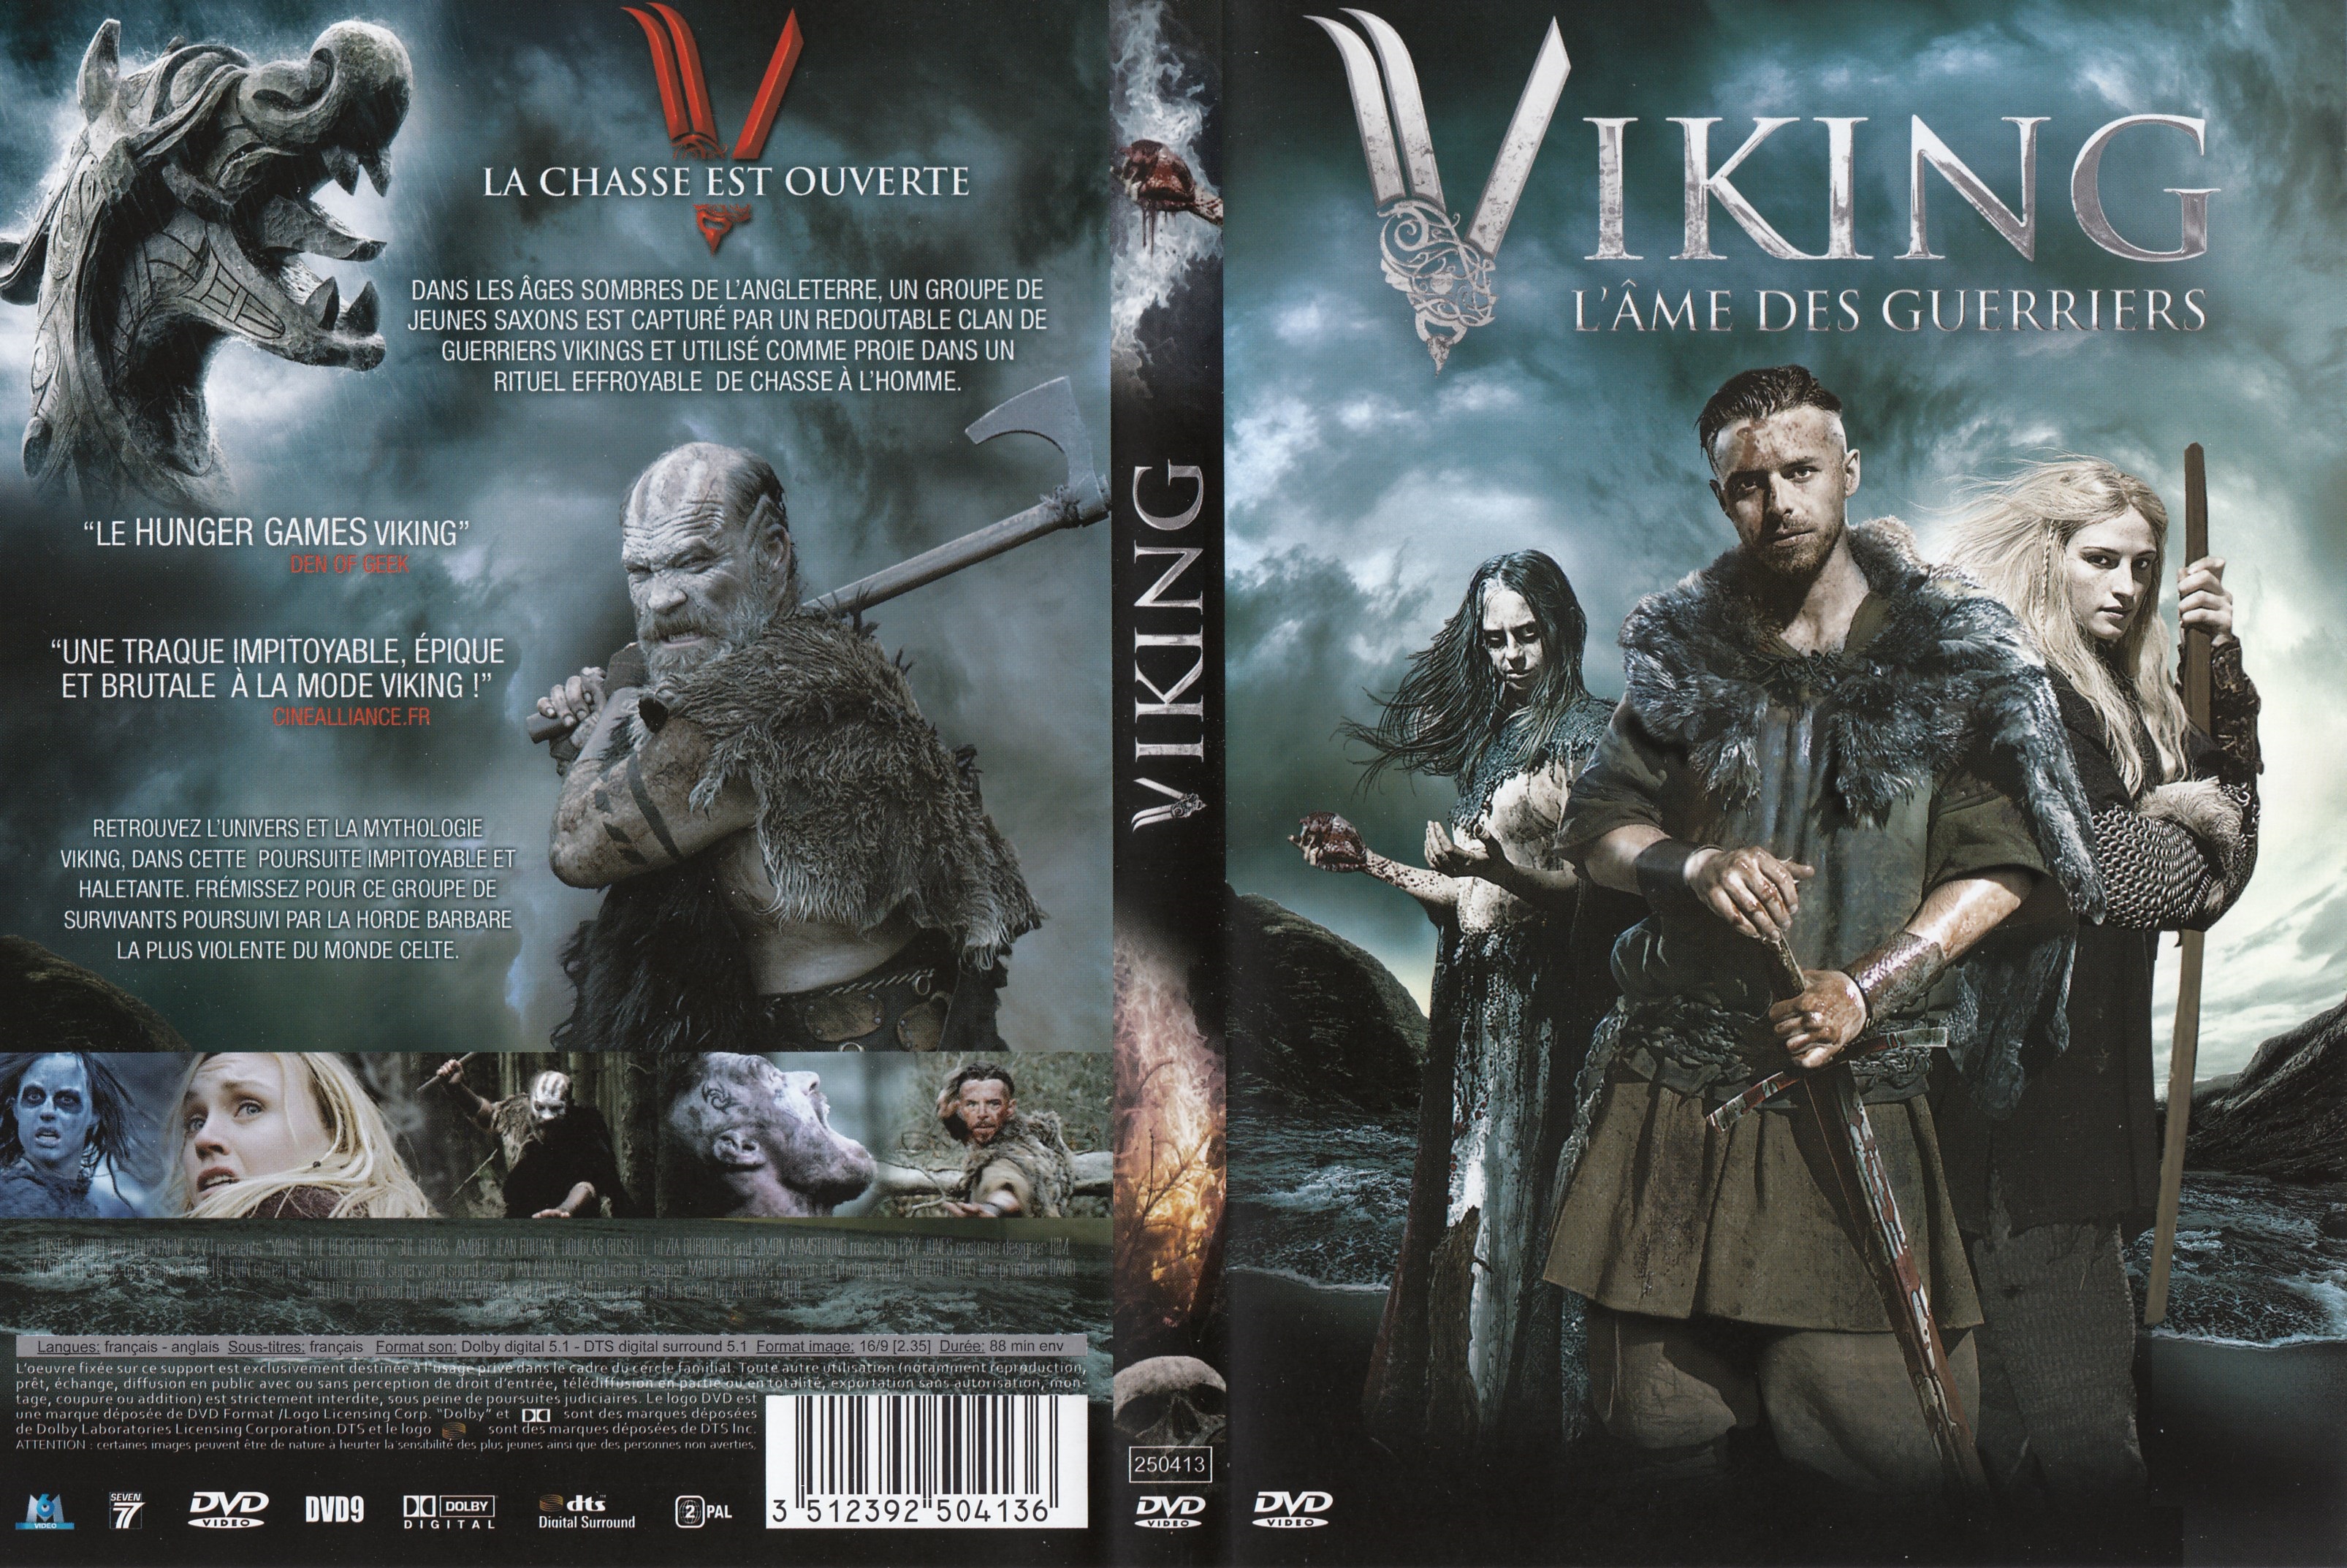 Jaquette DVD Viking L